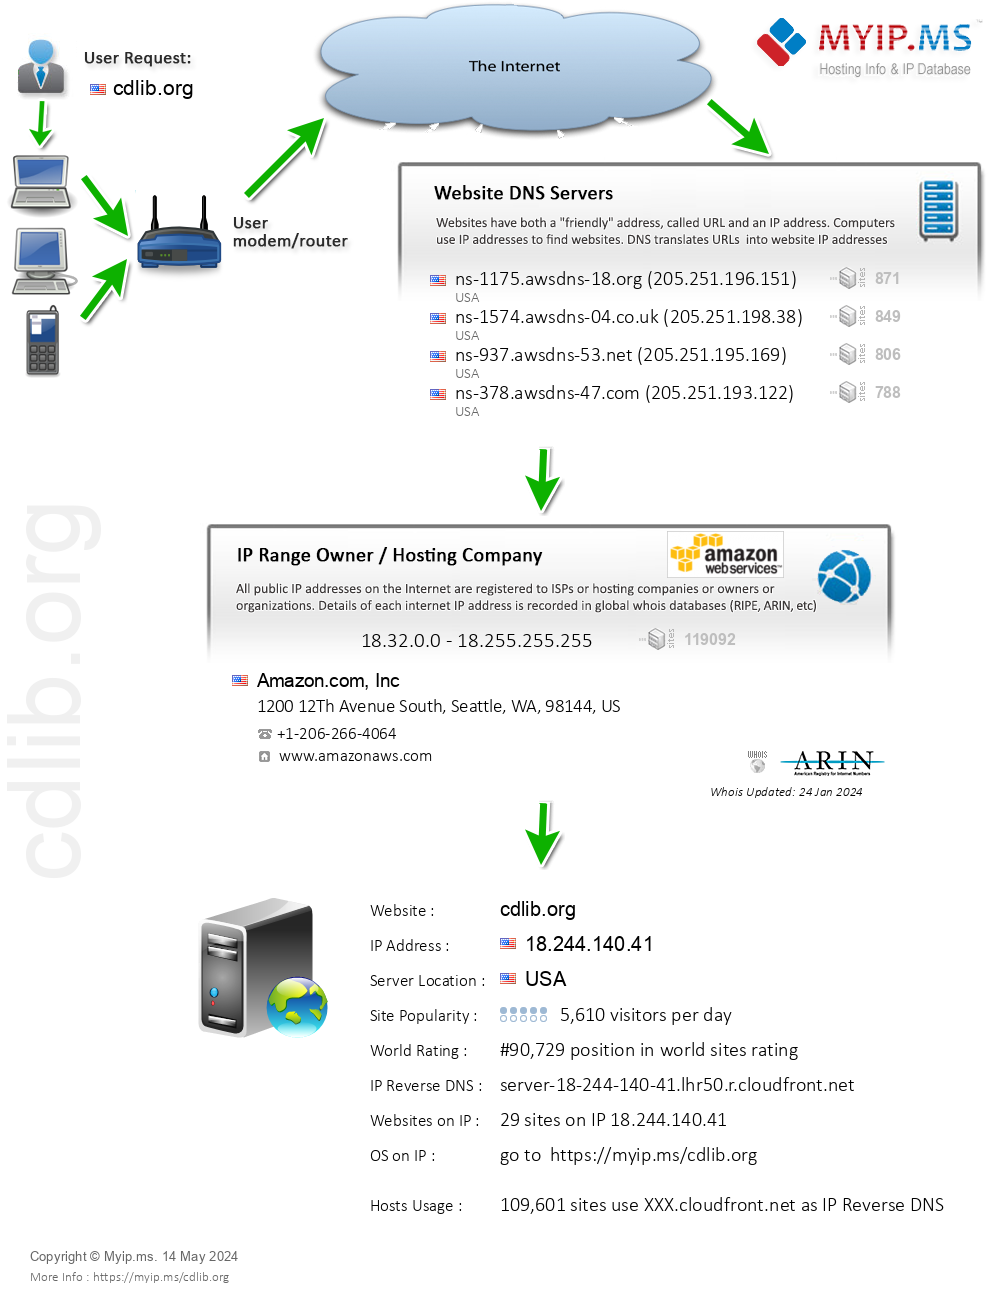 Cdlib.org - Website Hosting Visual IP Diagram